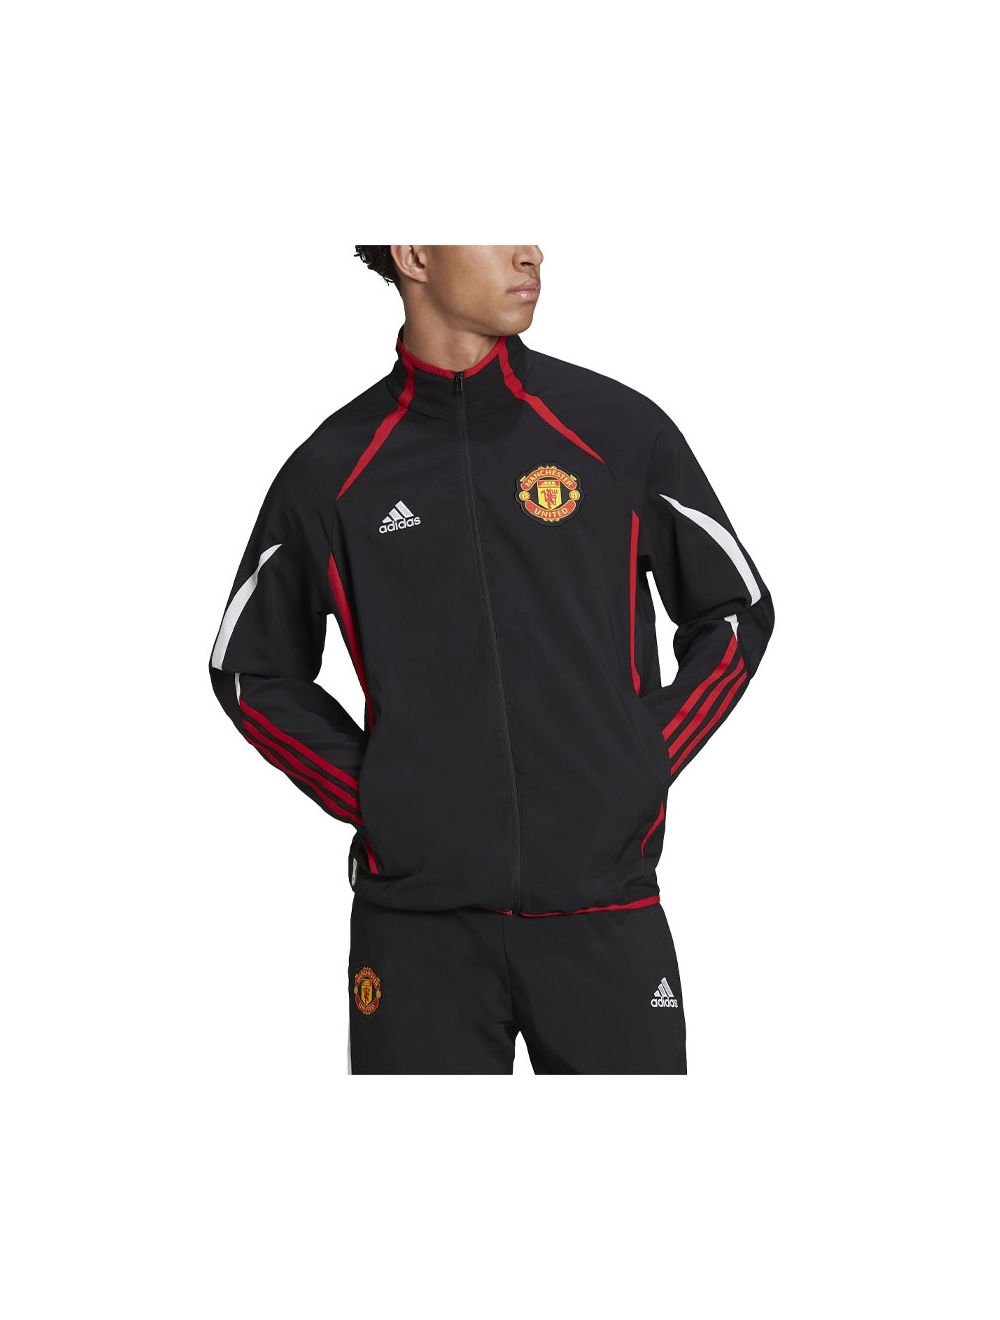 adidas Performance Manchester United Teamgeist Woven Jacket Mens Black